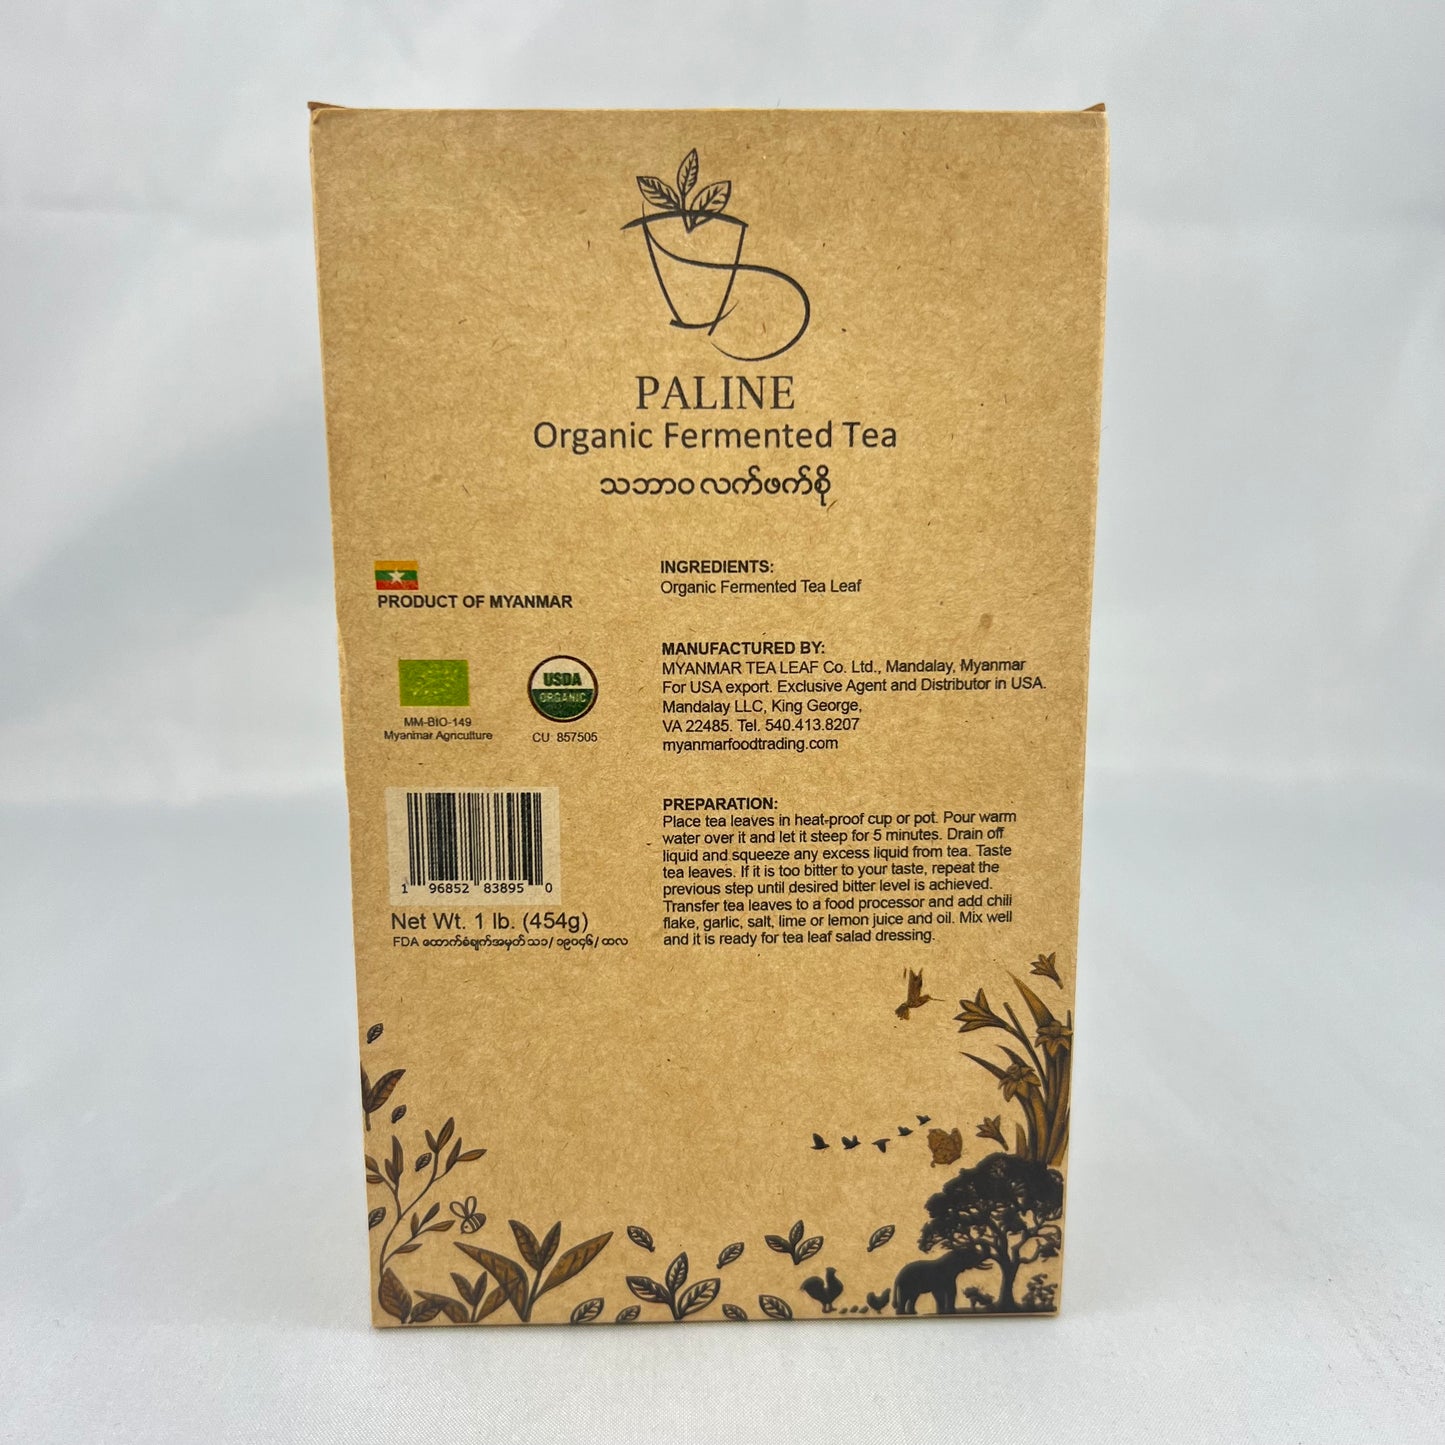 Paline Organic Fermented Tea Leaf (No Seasoning) (ပလိုင်း သဘာဝ လက်ဖက်စို) 1 lb